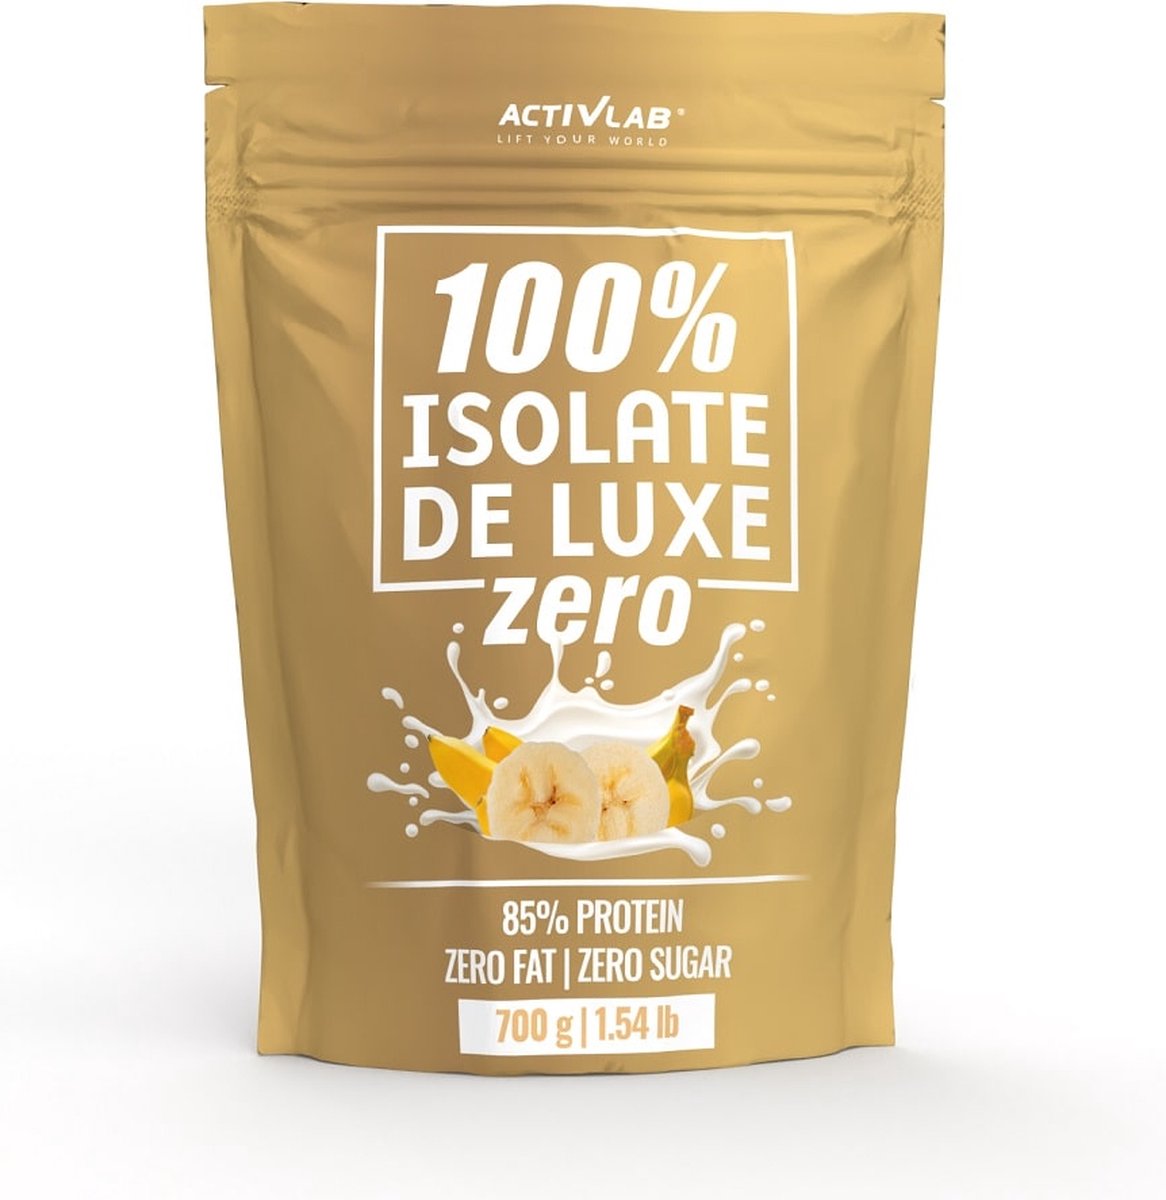 Activlab - 100% Whey Isolate De Luxe Zero - 85g protein - Eiwit Poeder - Whey-Isolaat - Suikervrij/Vetvrij - 700g - Banana